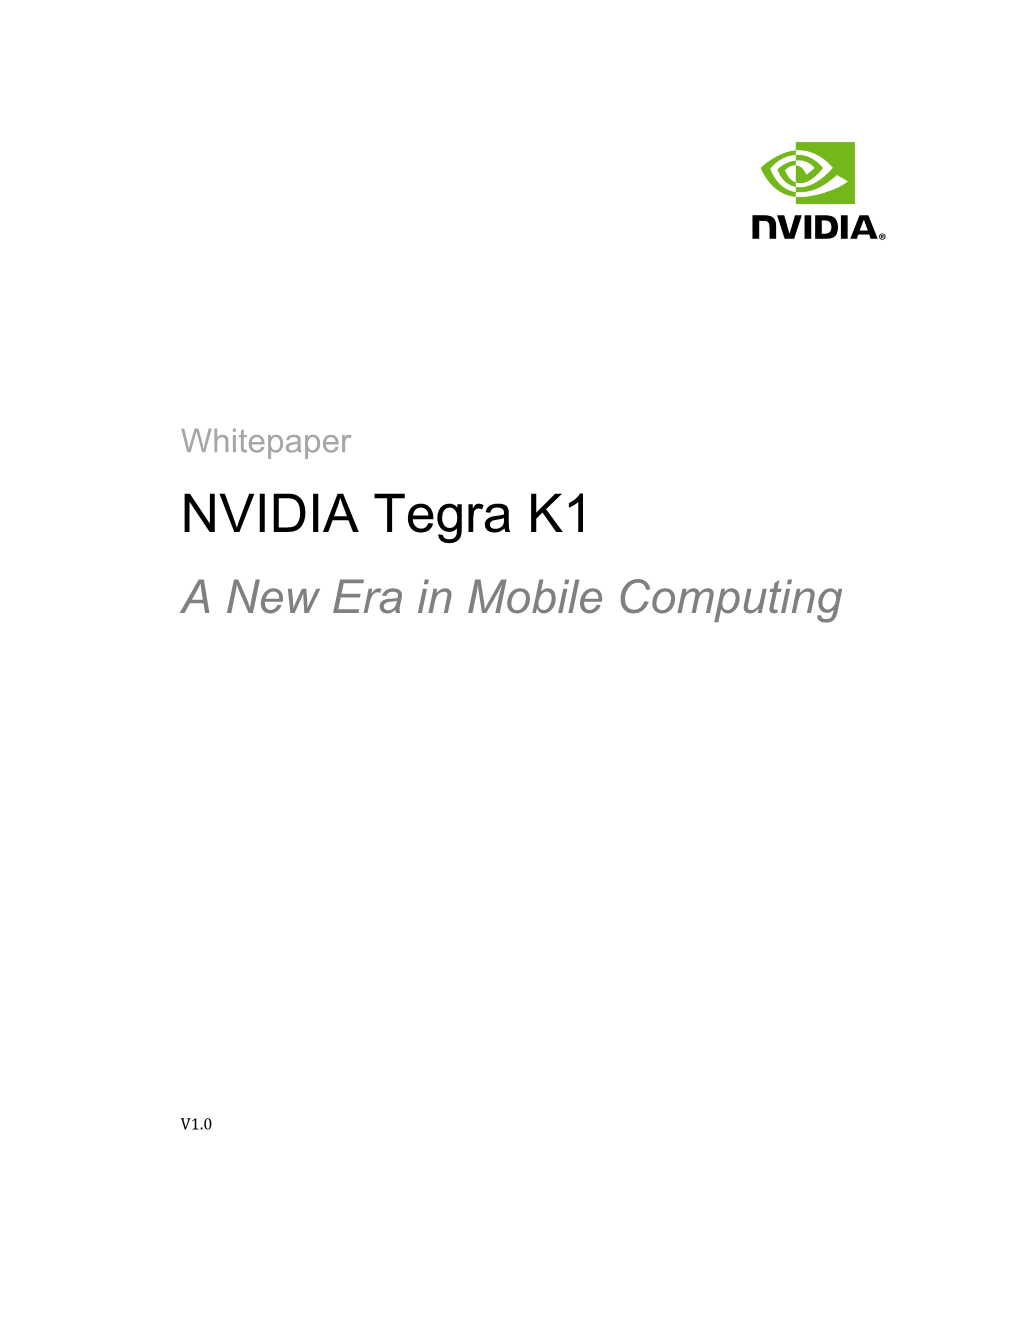 NVIDIA Tegra K1 a New Era in Mobile Computing